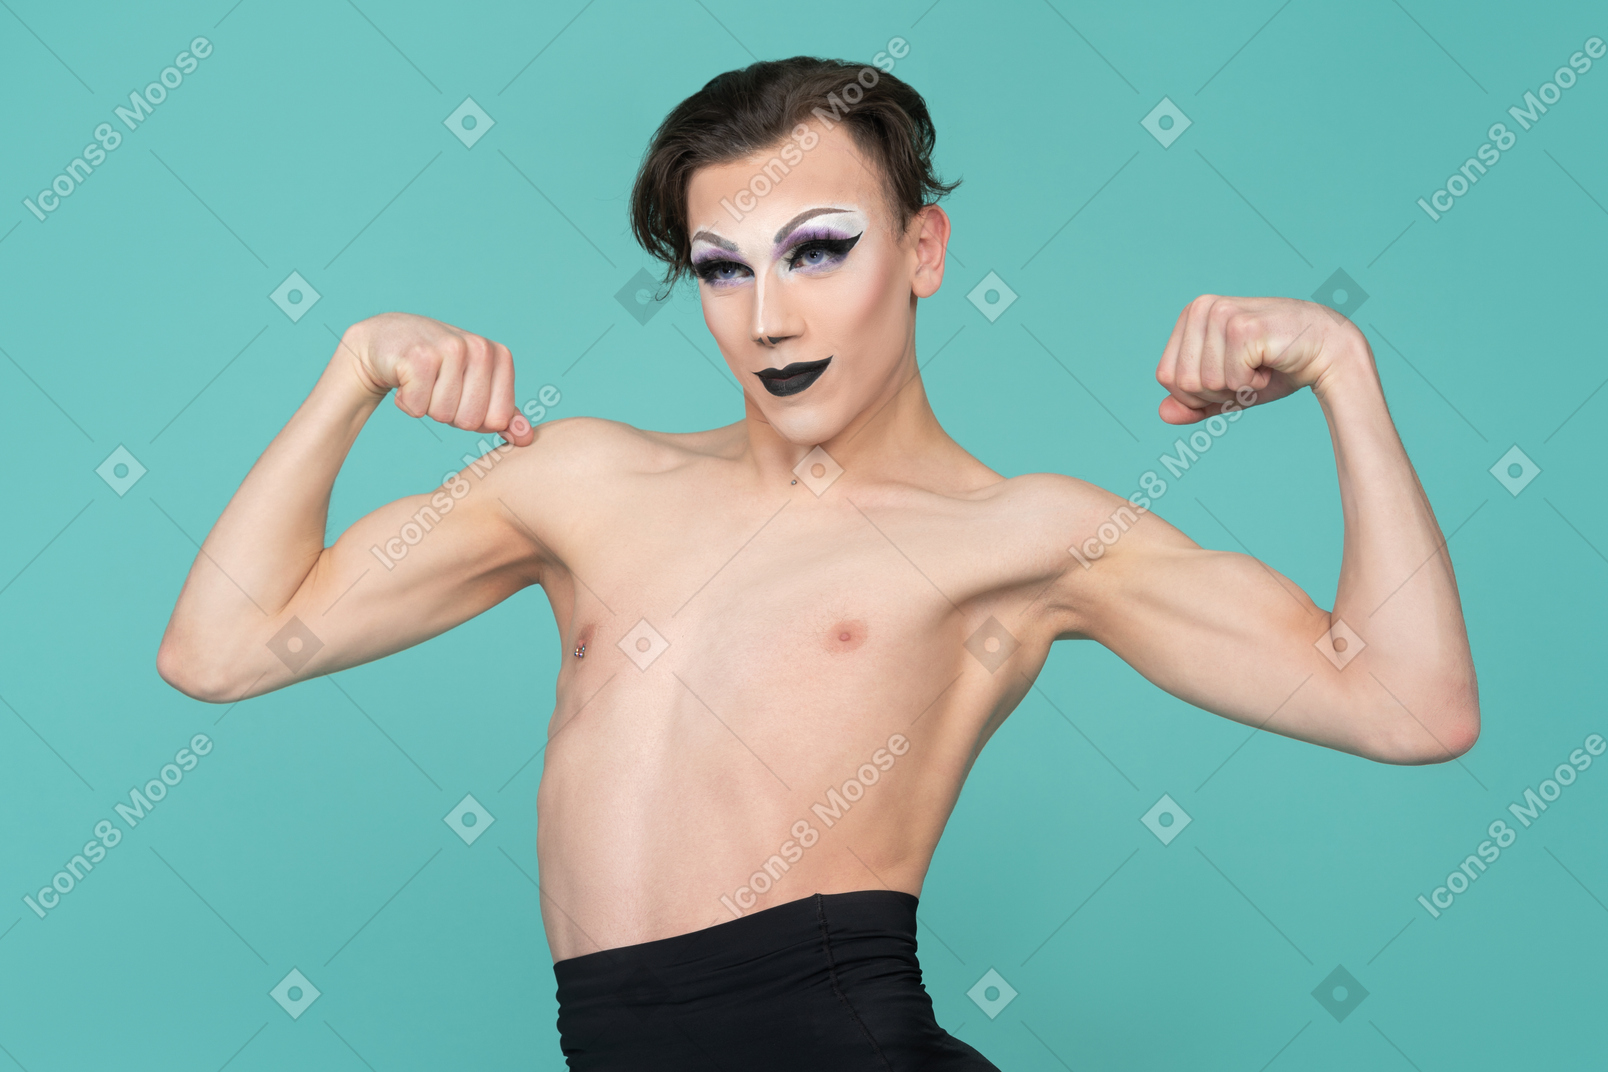 Drag queen flexing arm muscles